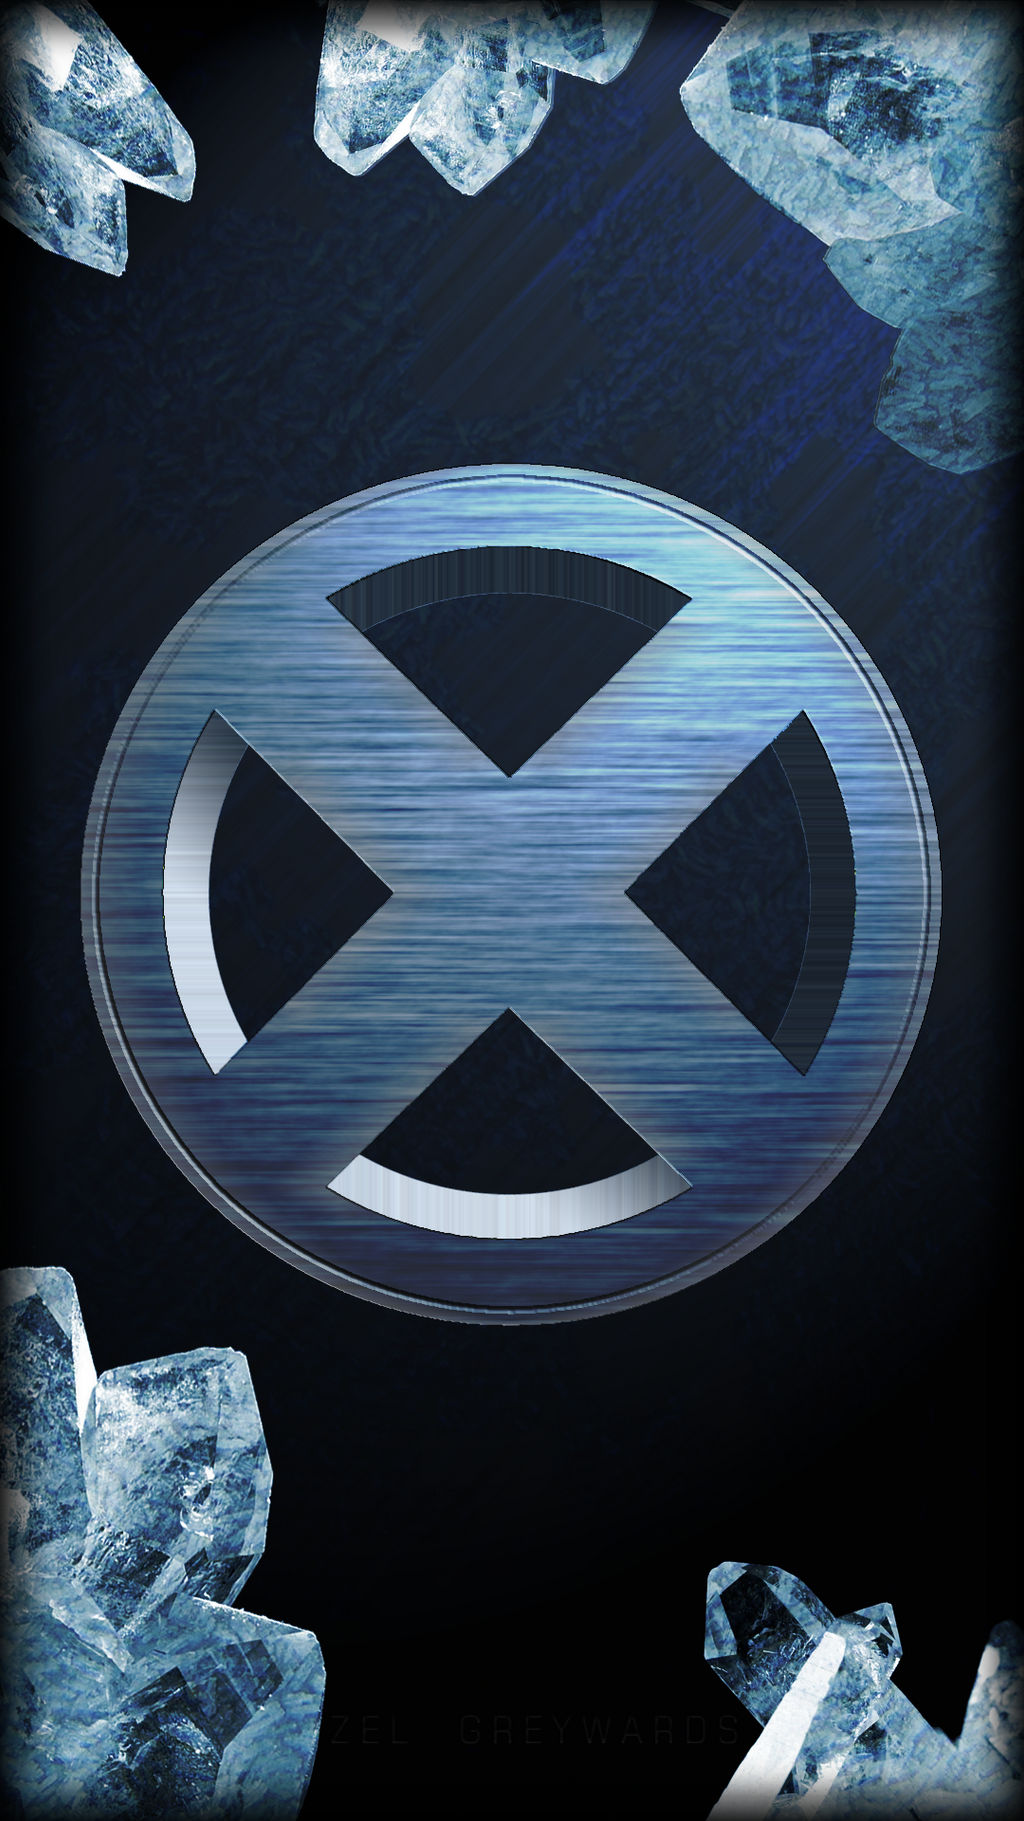 X-Men Logo - Iceman (Galaxy S4 Wallpaper) by zelgreywards on DeviantArt